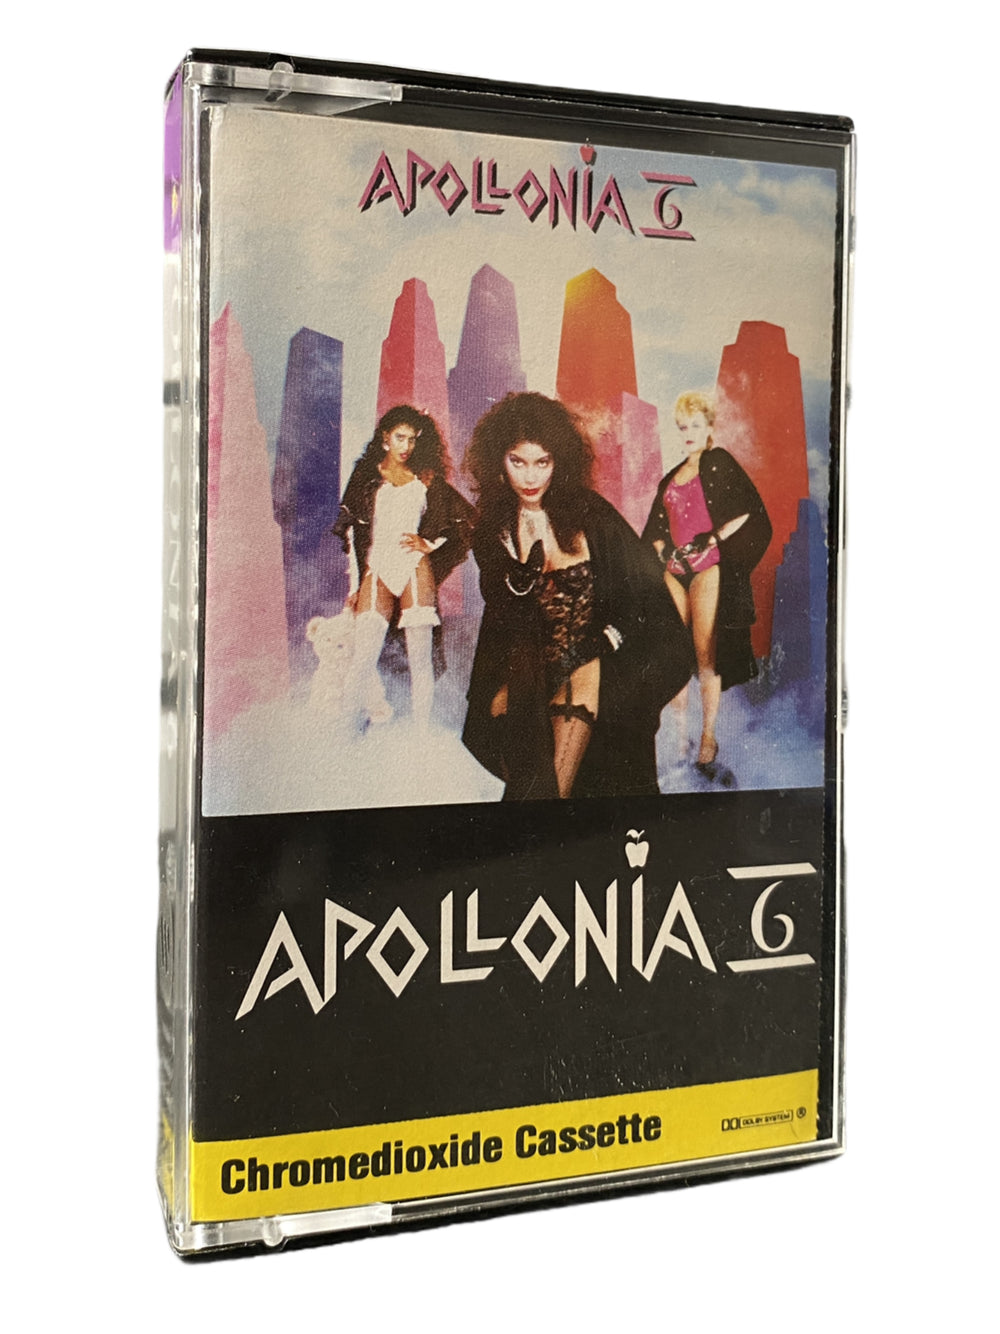 Prince – Apollonia 6 Self Titled Tape Cassette WEA Records UK/EU Release Prince